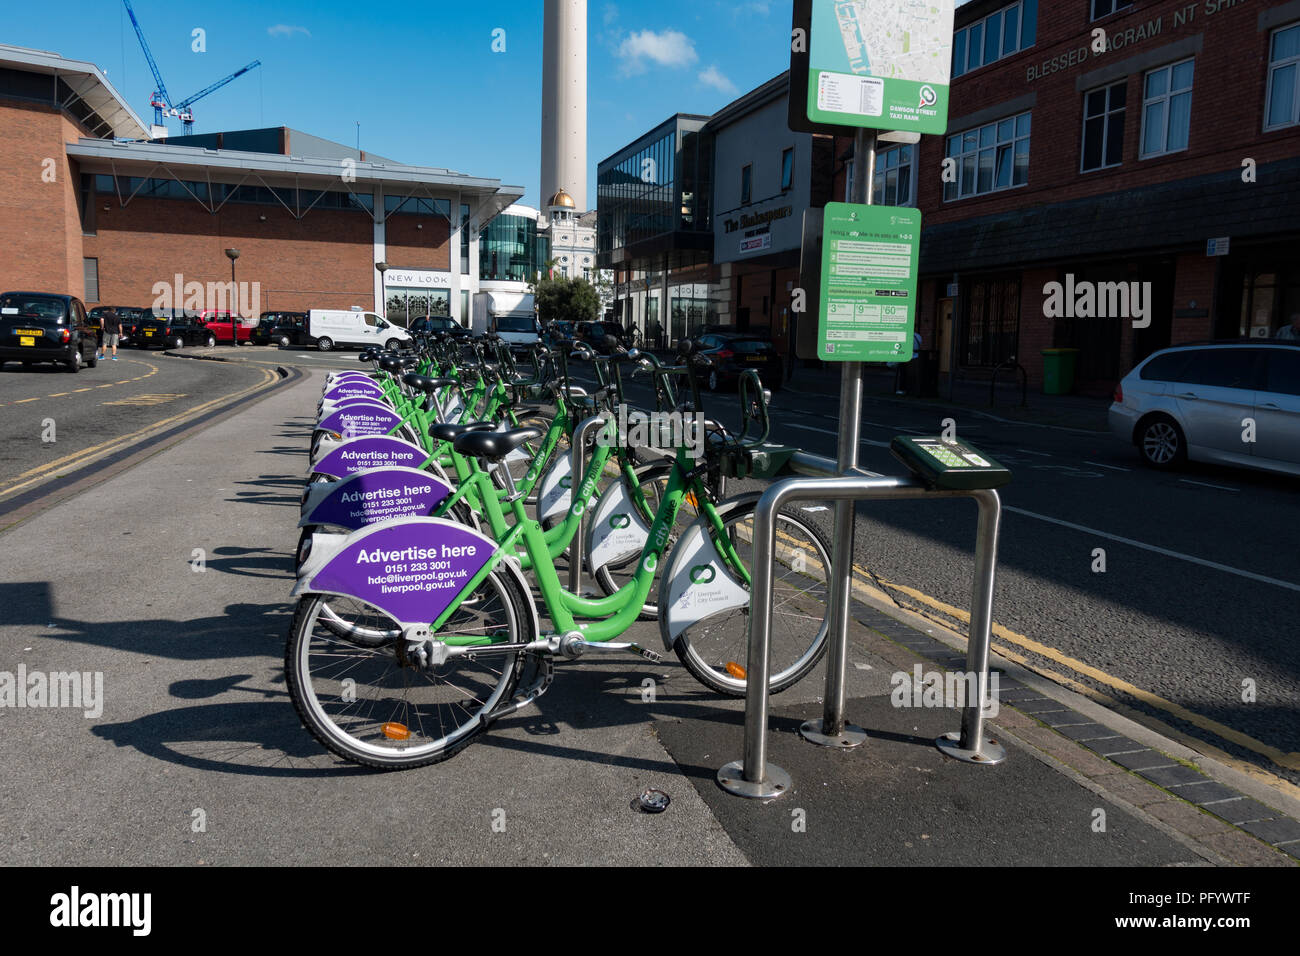 Citybike bikes lined up at docking station. Liverpool. UK Stock Photo -  Alamy